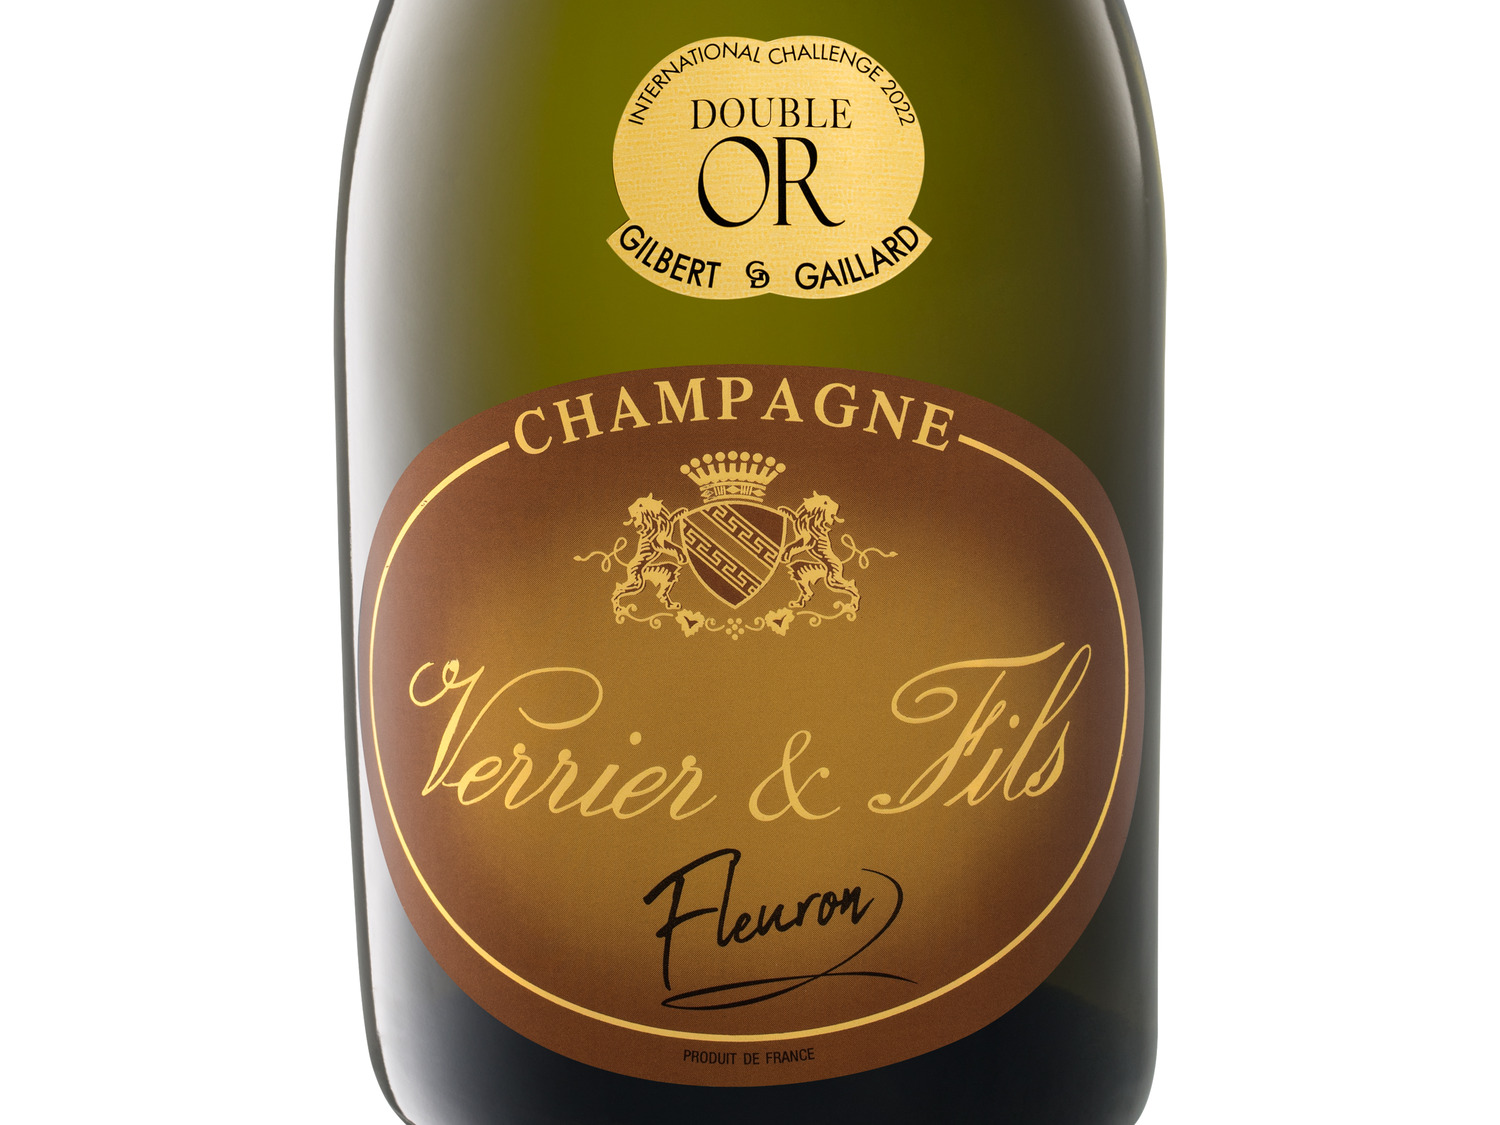 Champagner Hotsell Cuvée Verrier Fils brut Fleuron ZR7404 & Spielraum | Mesjeuxipad